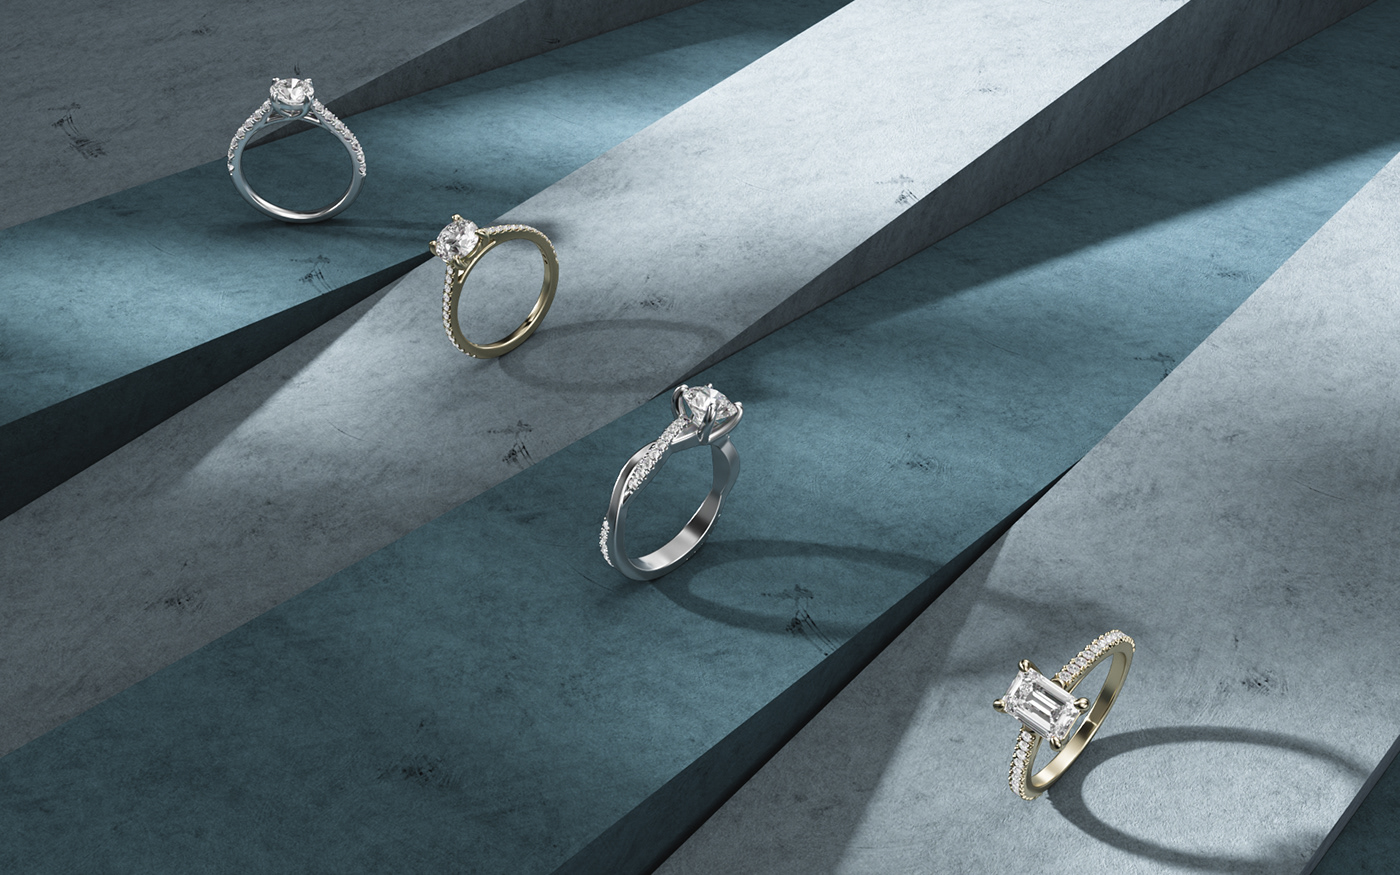 Sparkling engagement rings elegantly displayed on a mesmerizing blue surface.